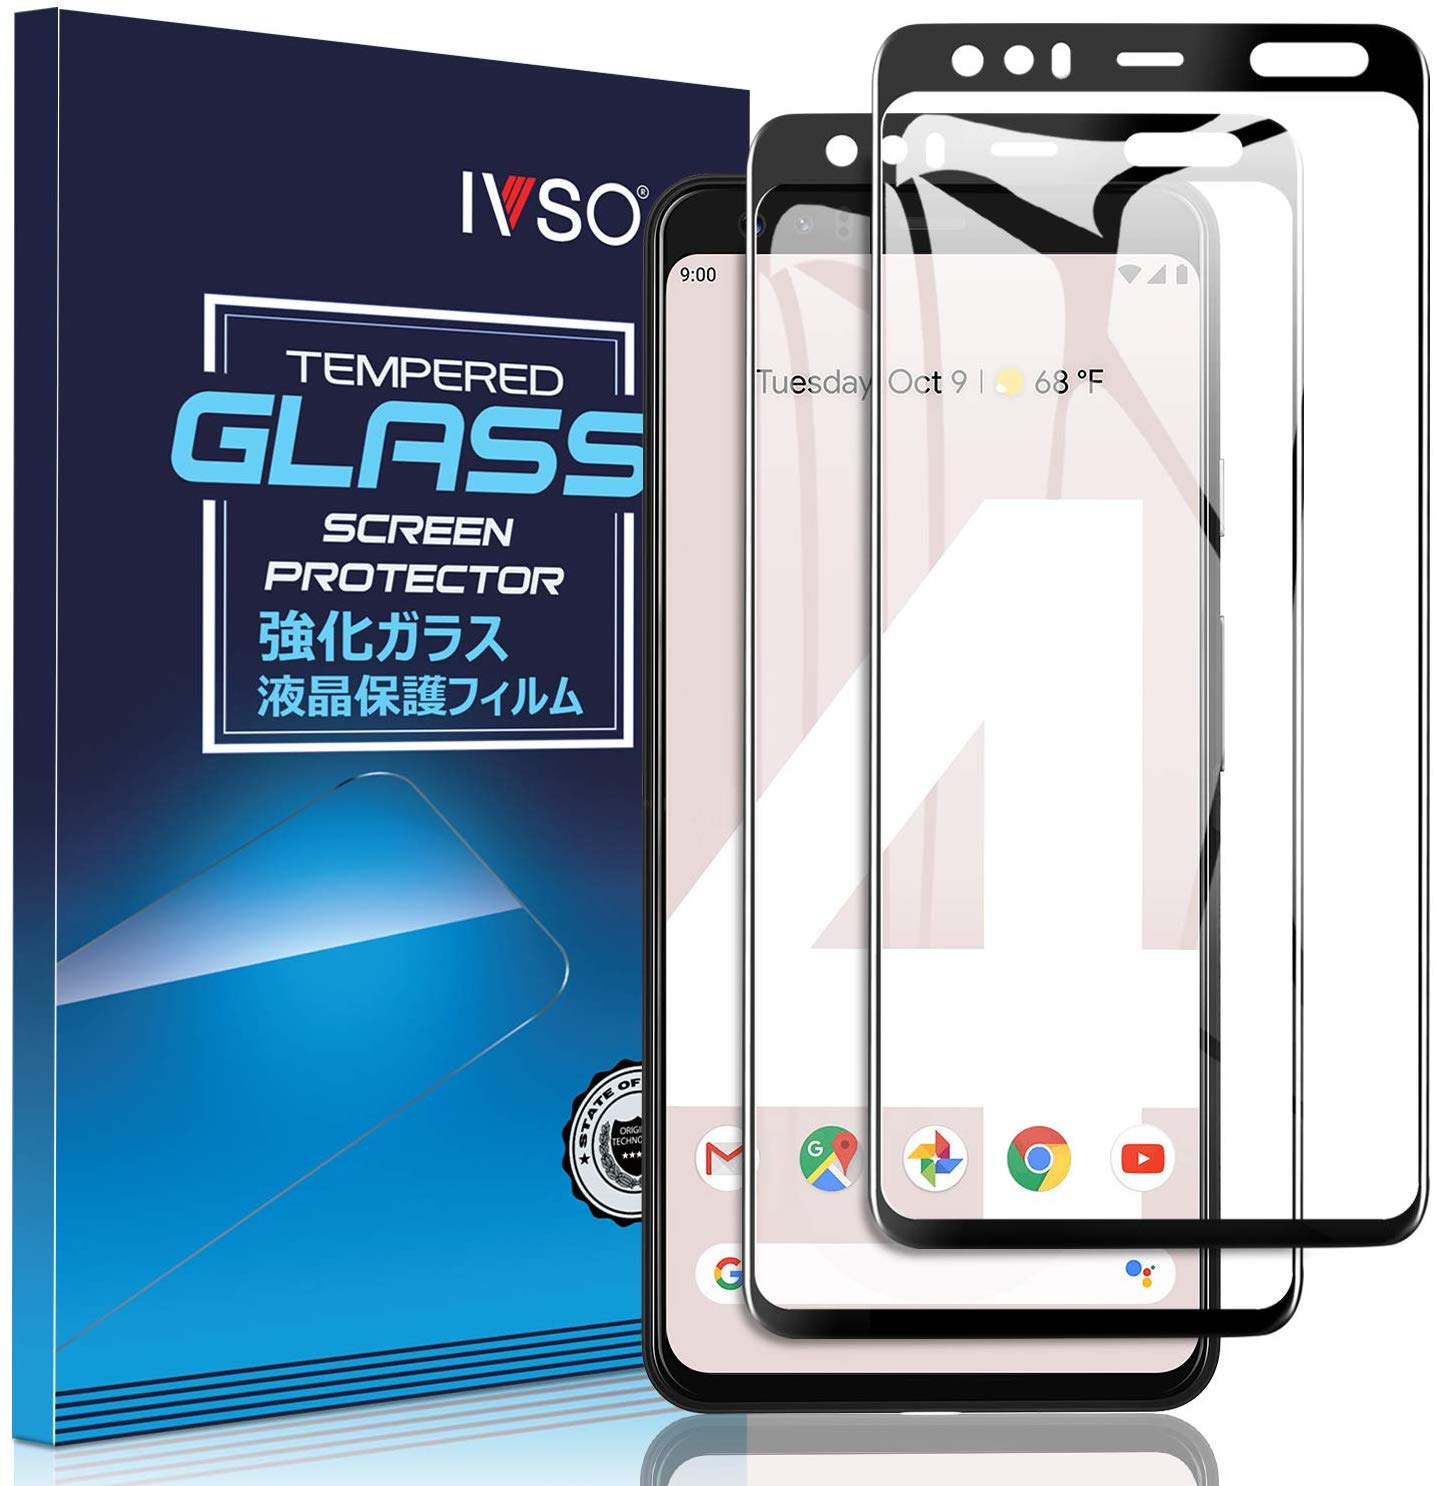 ivso-tempered-glass-pixel-4-xl-press.jpg